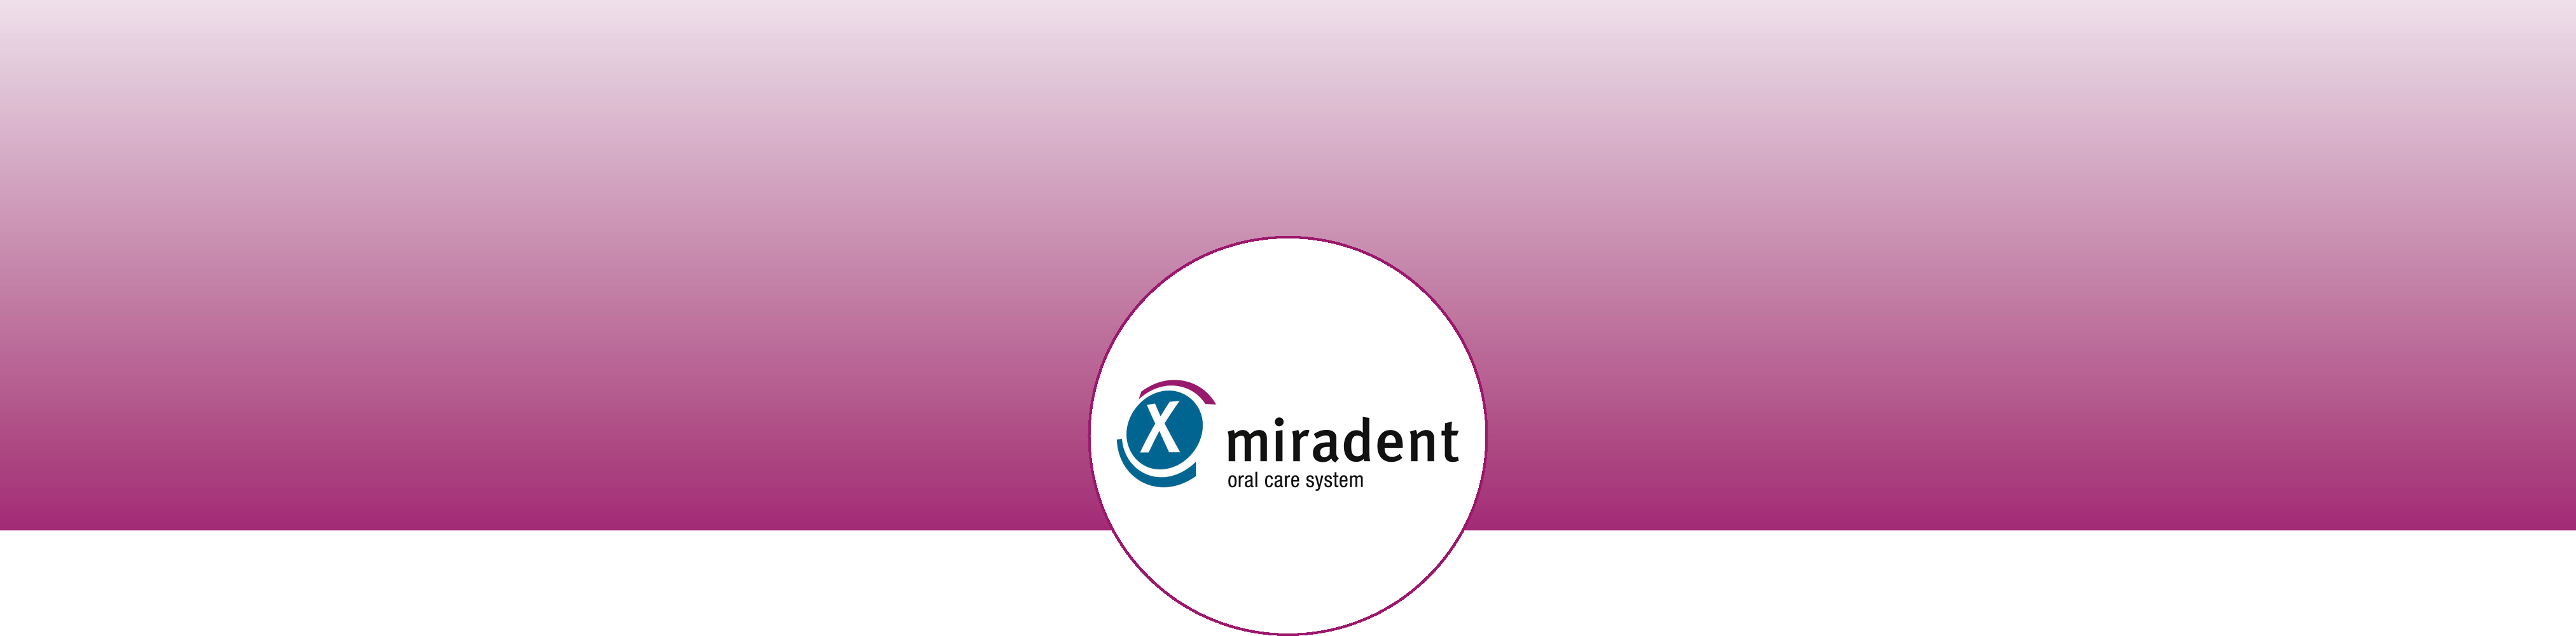 banner_miradent